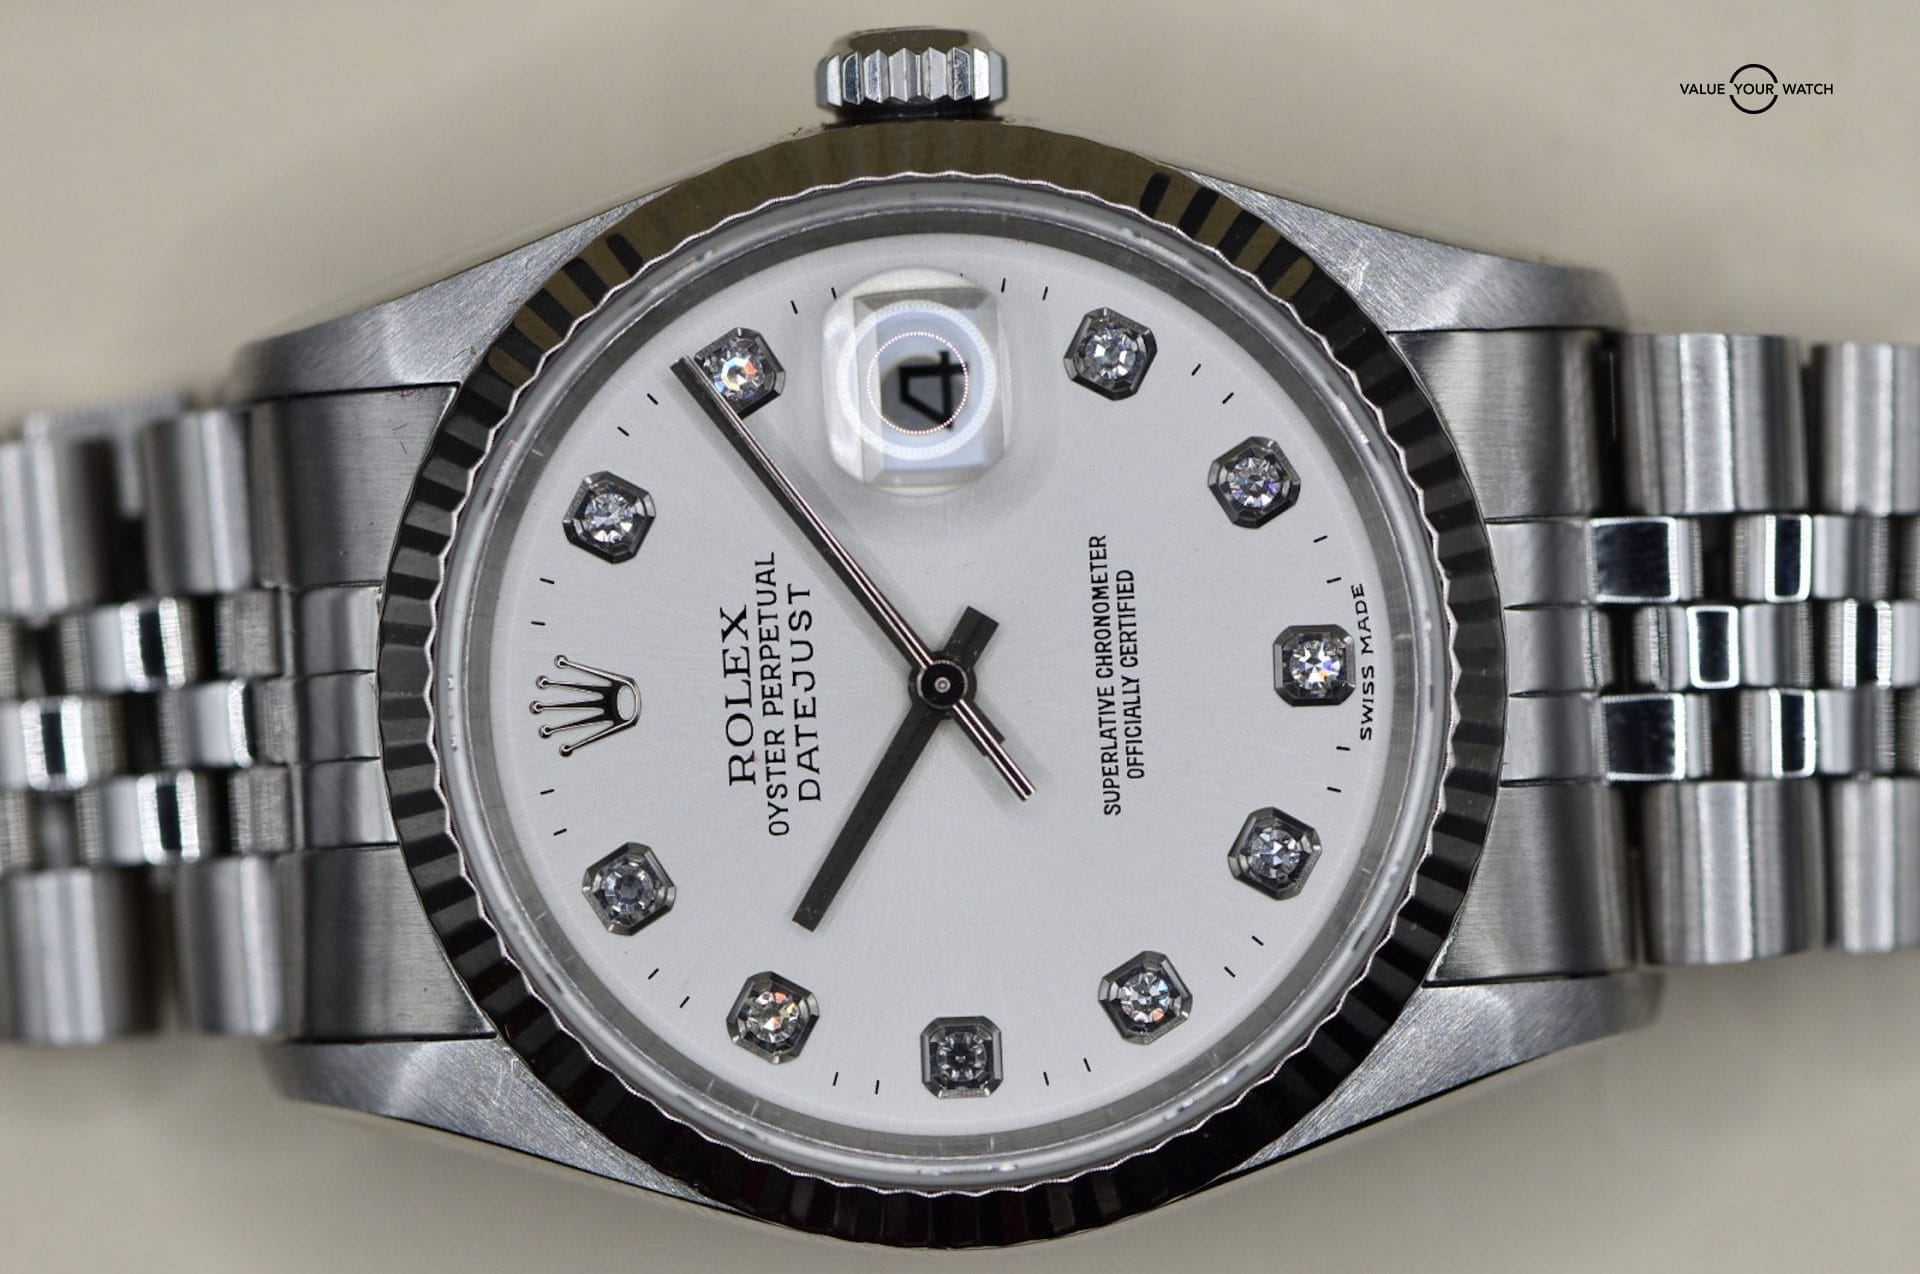 Rolex Datejust 36 16234 | Value Your Watch